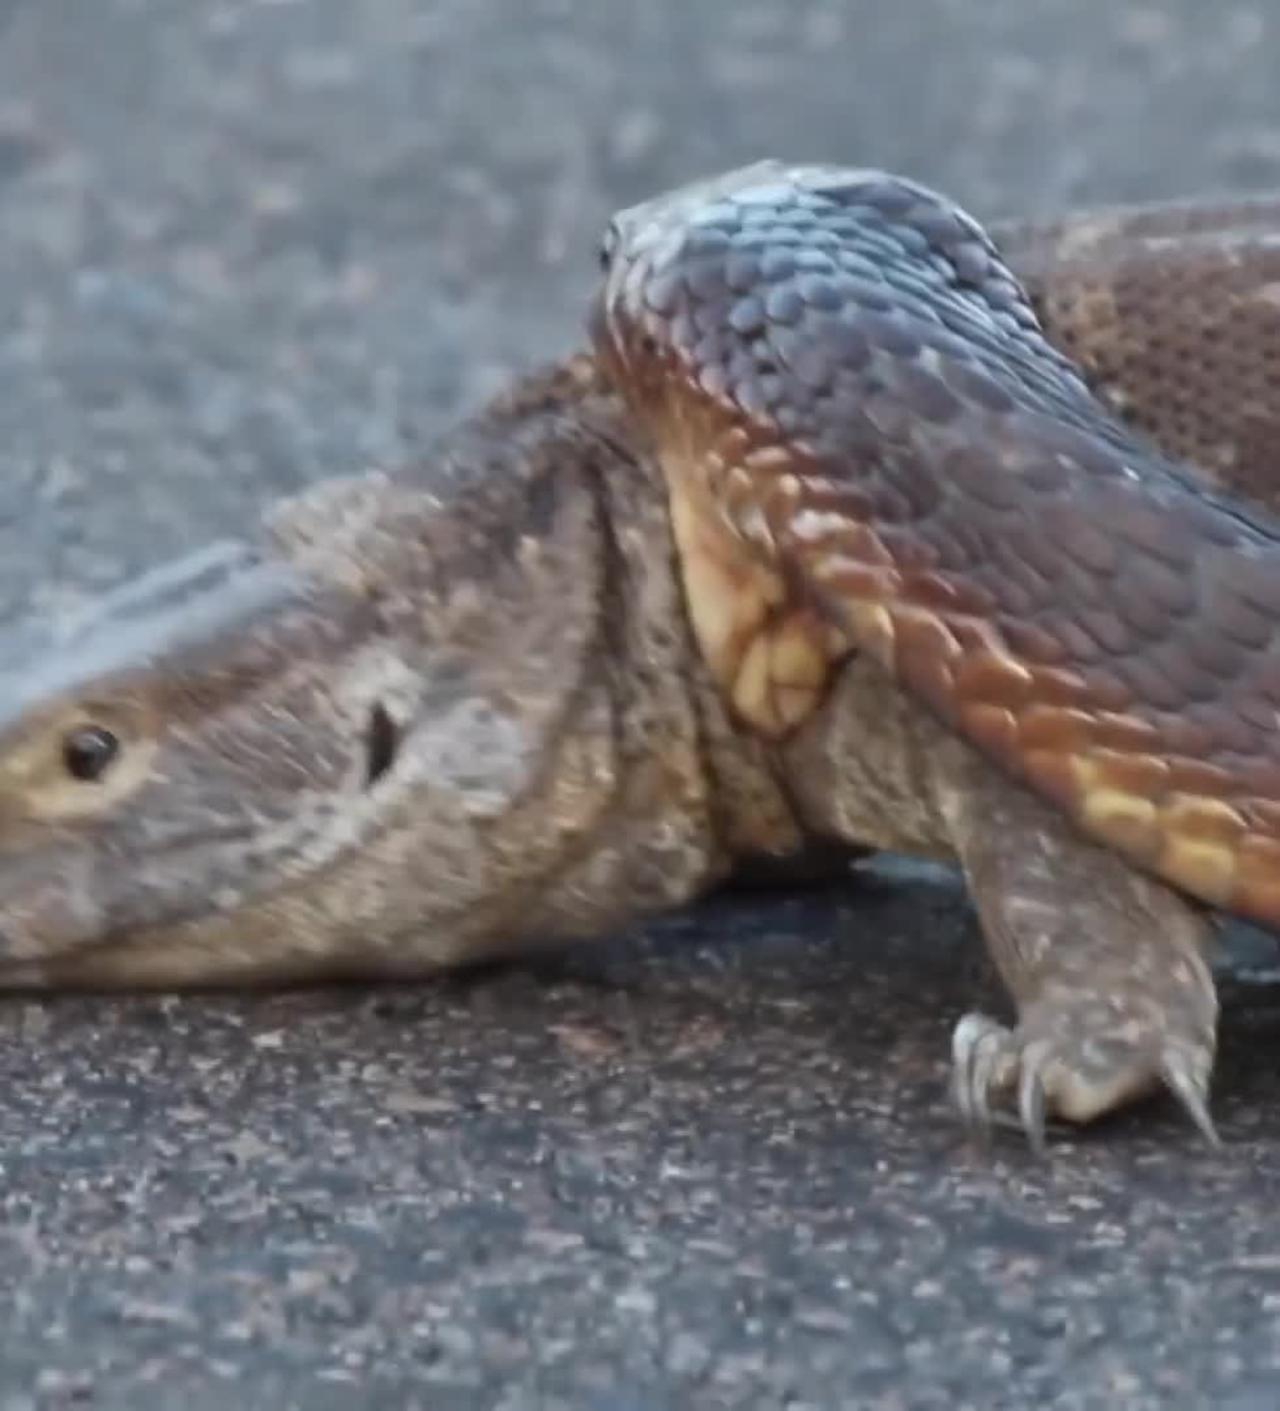 A persistent struggle of a large snake biting a large lizard.